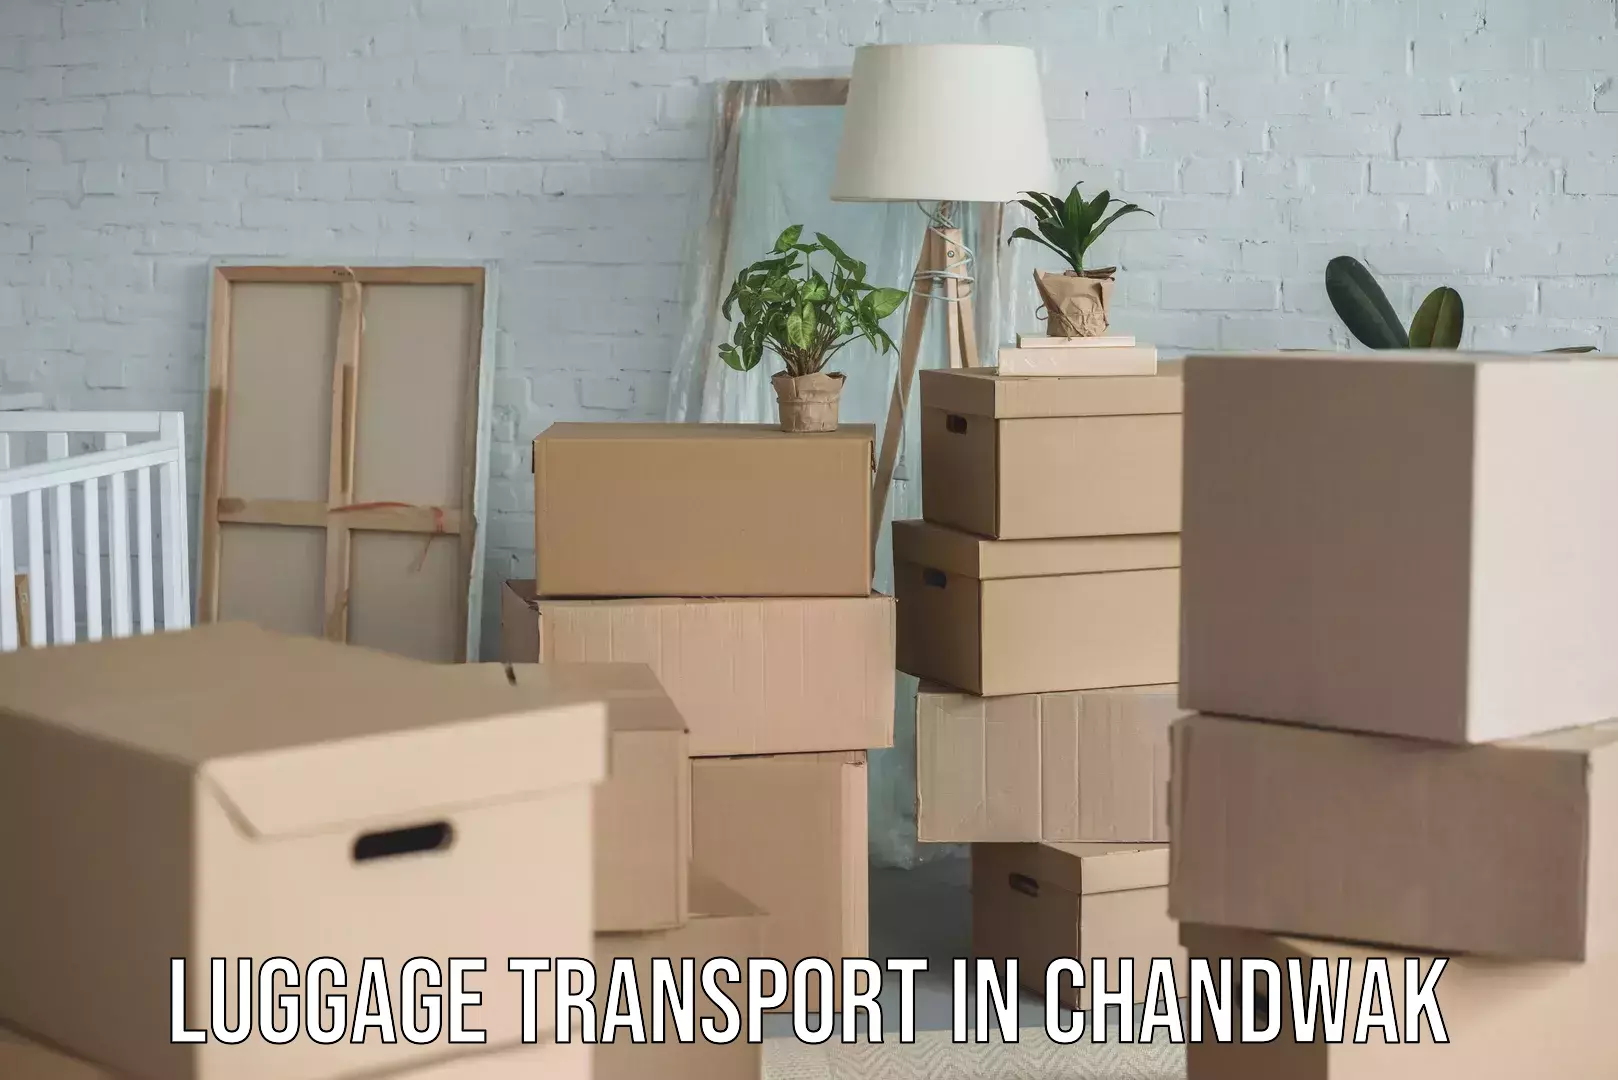 Weekend baggage shipping in Chandwak